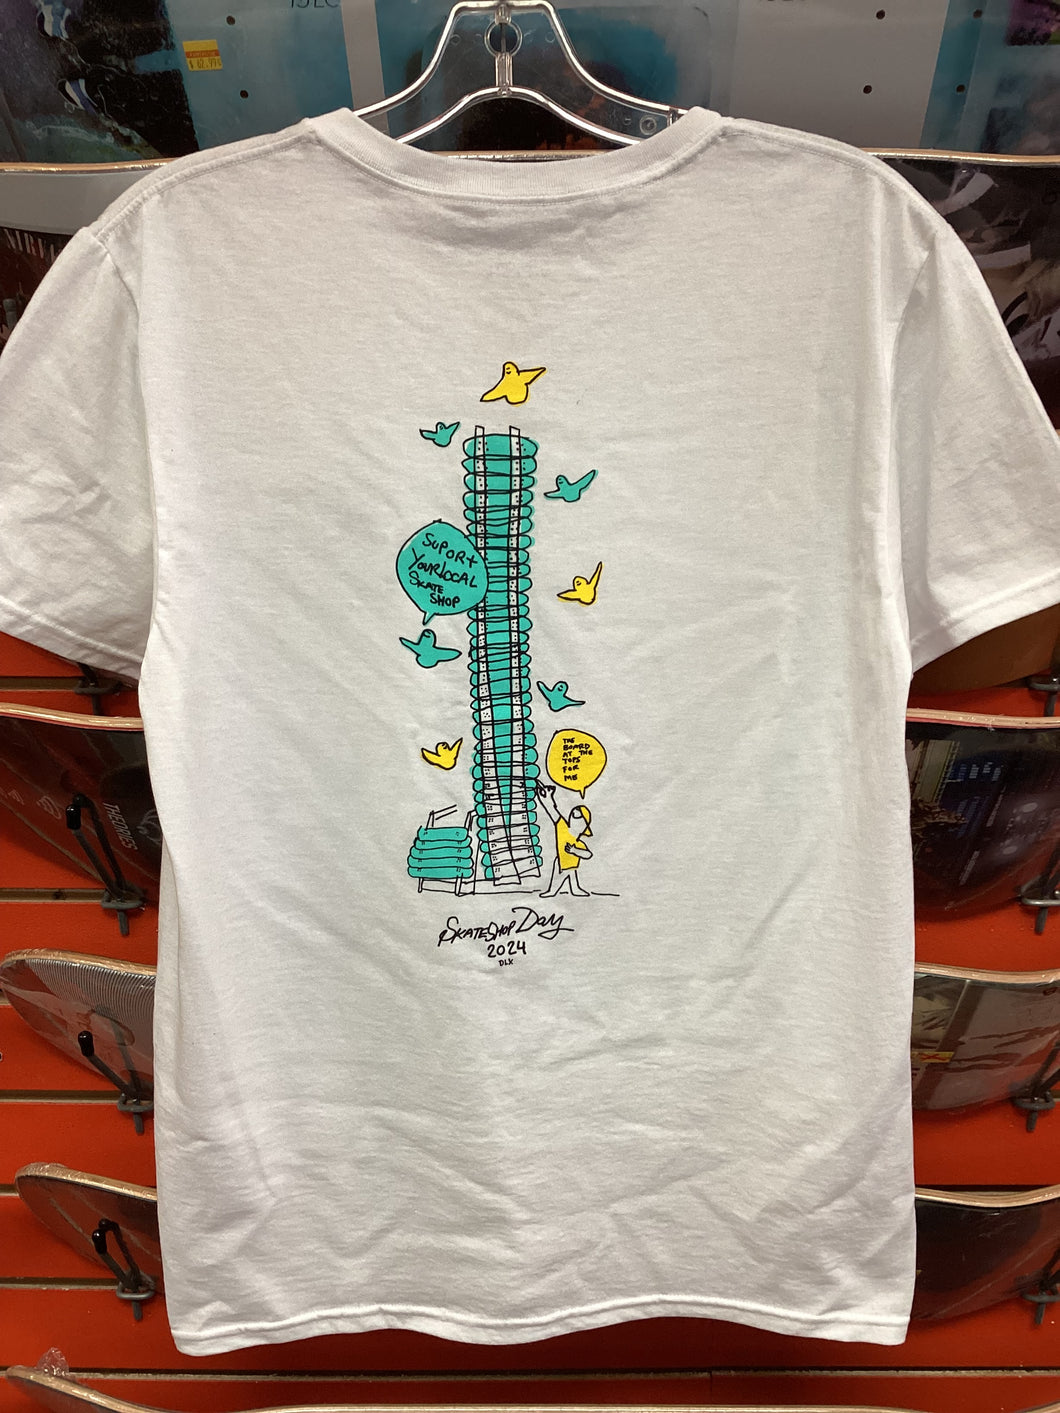 Funtastik Skate Shop Day Limited Gonz Art T-Shirt White